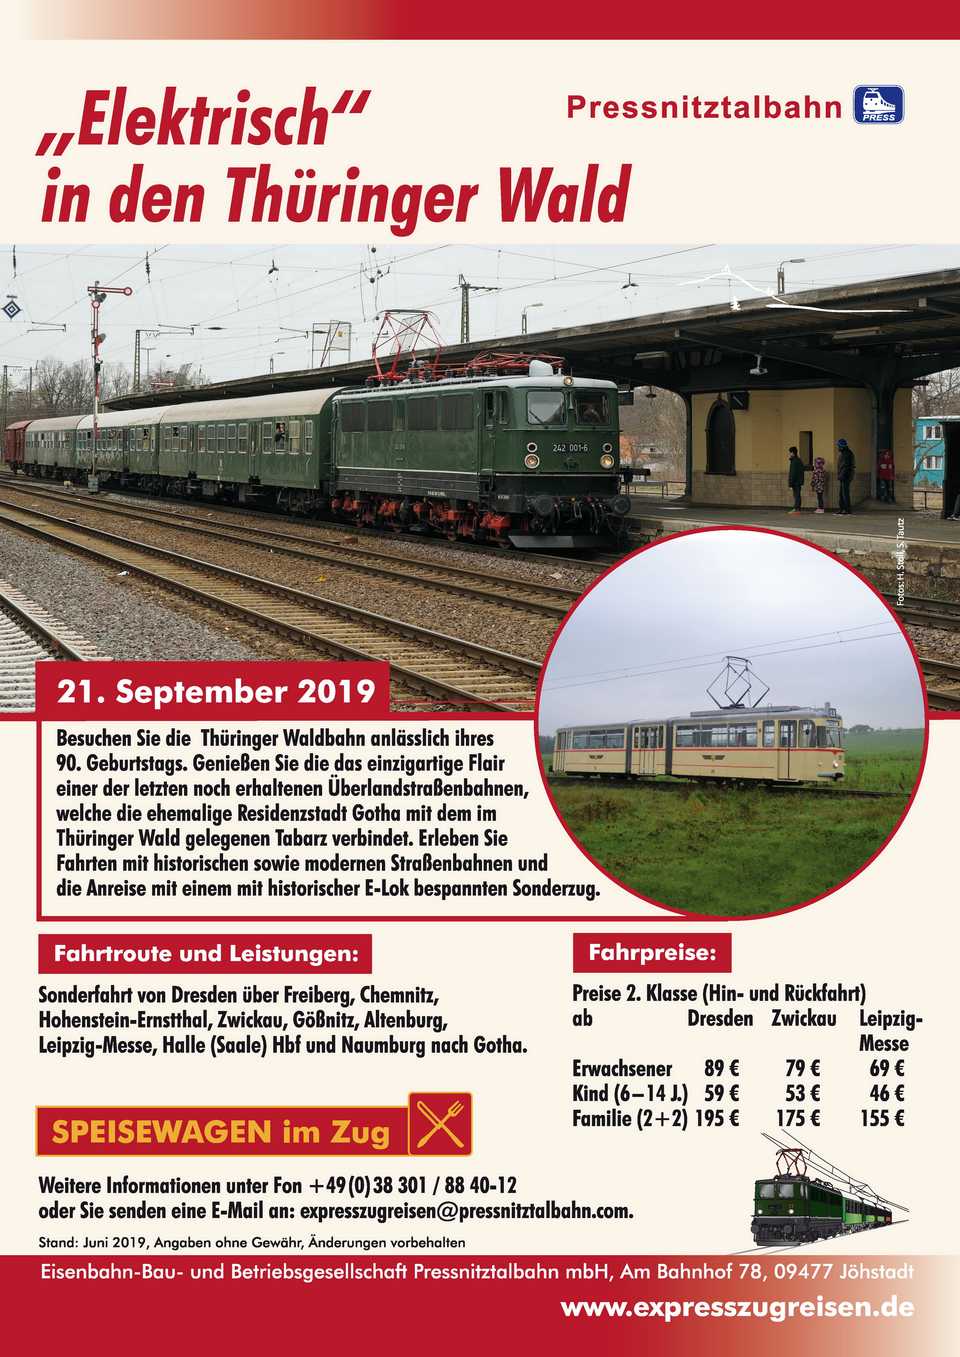 Veranstaltungsankündigung: 21. September 2019: „Elektrisch“ in den Thüringer Wald